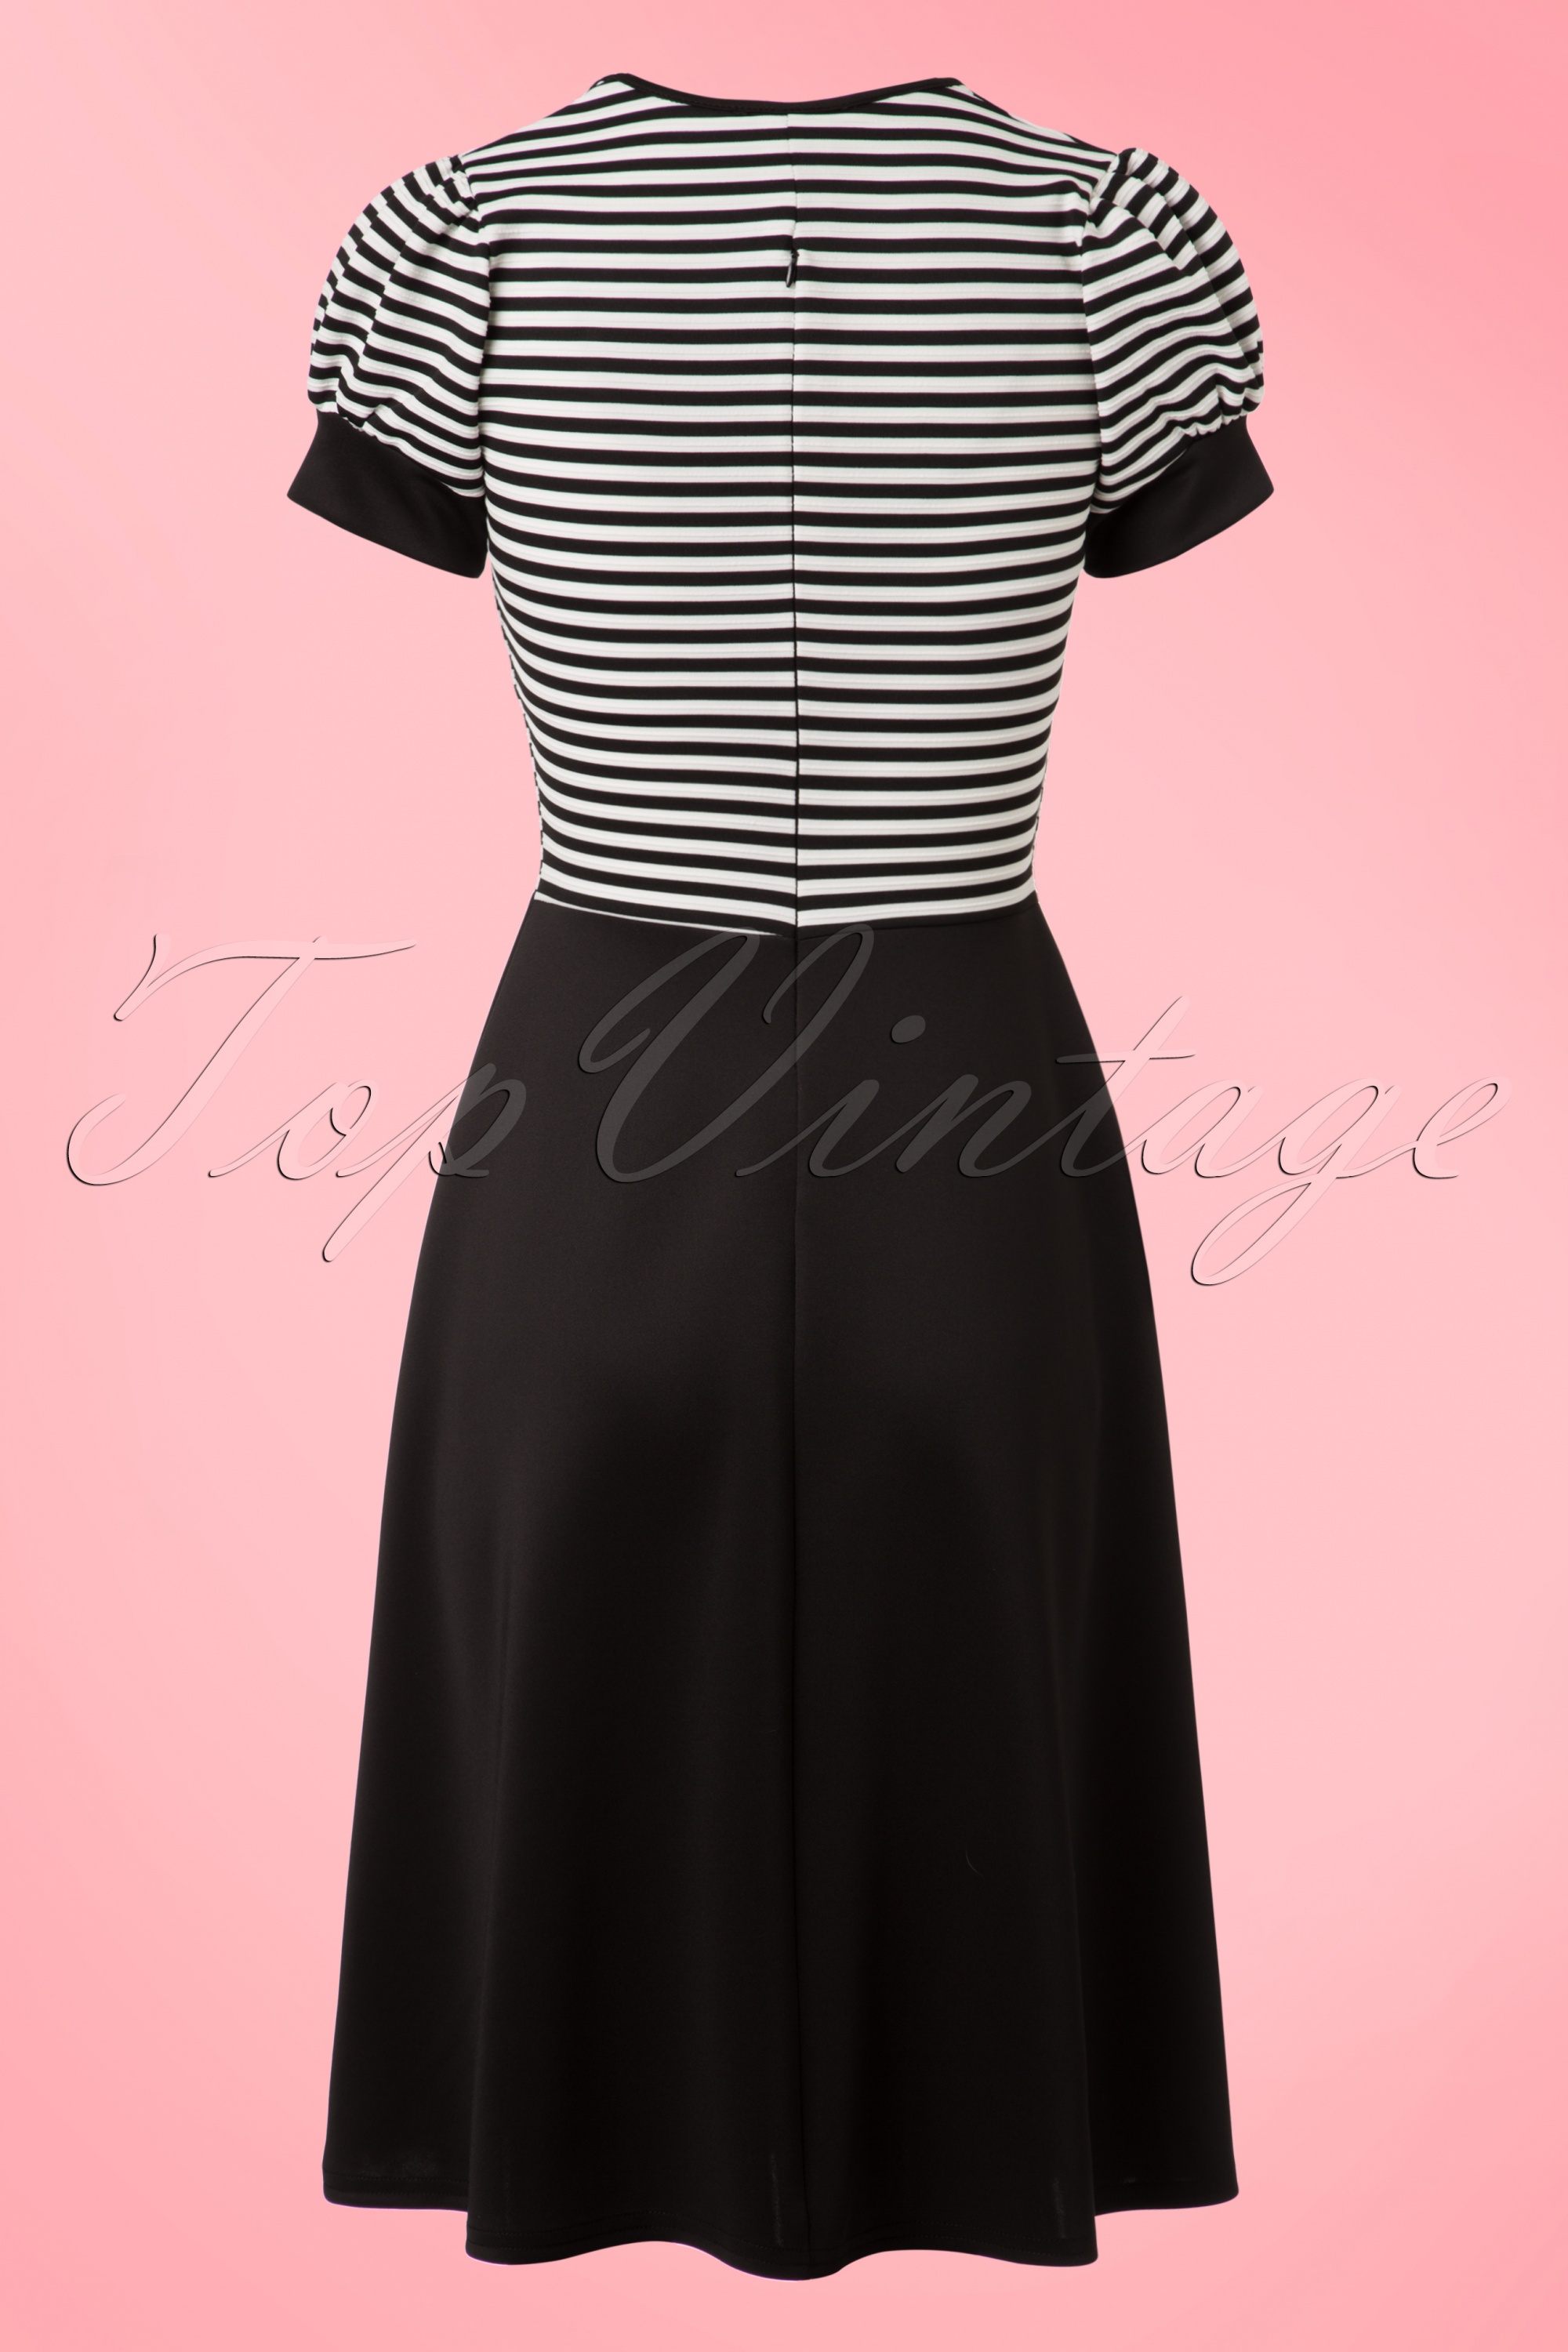 Vintage Chic for Topvintage - Robin Swing-jurk in zwart-witte strepen 3